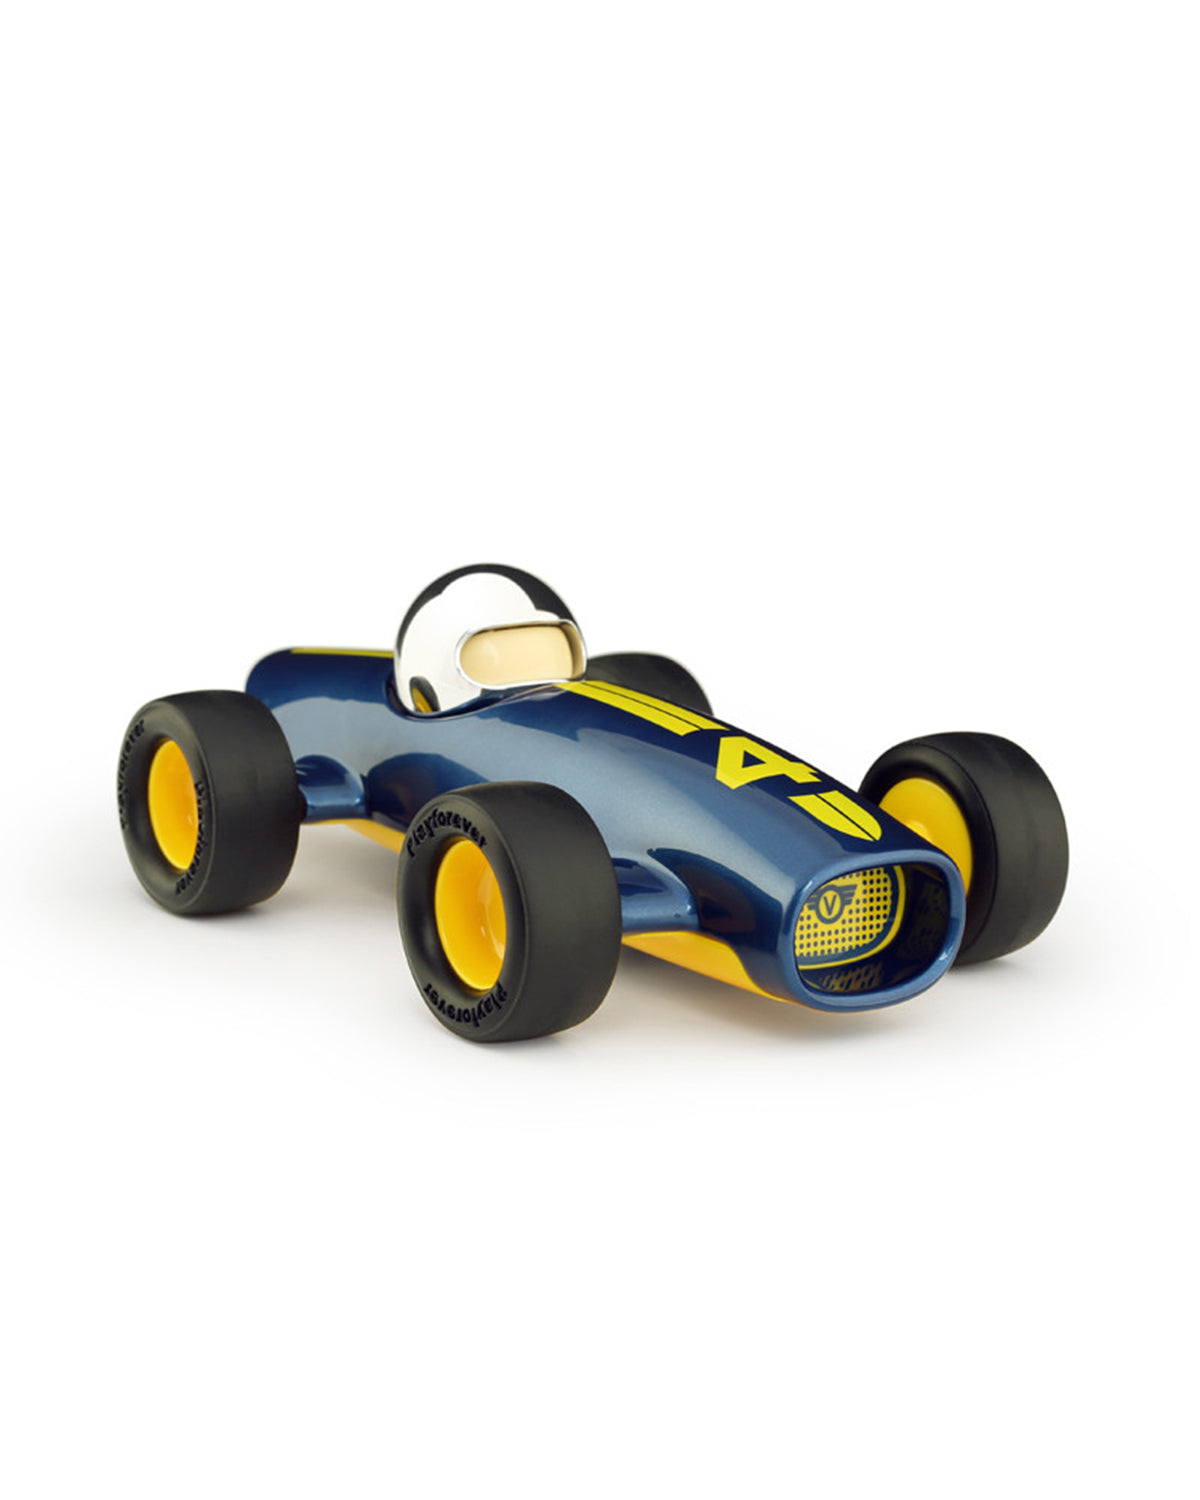 Playforever Toy Car VERVE MALIBU Blue/Yellow